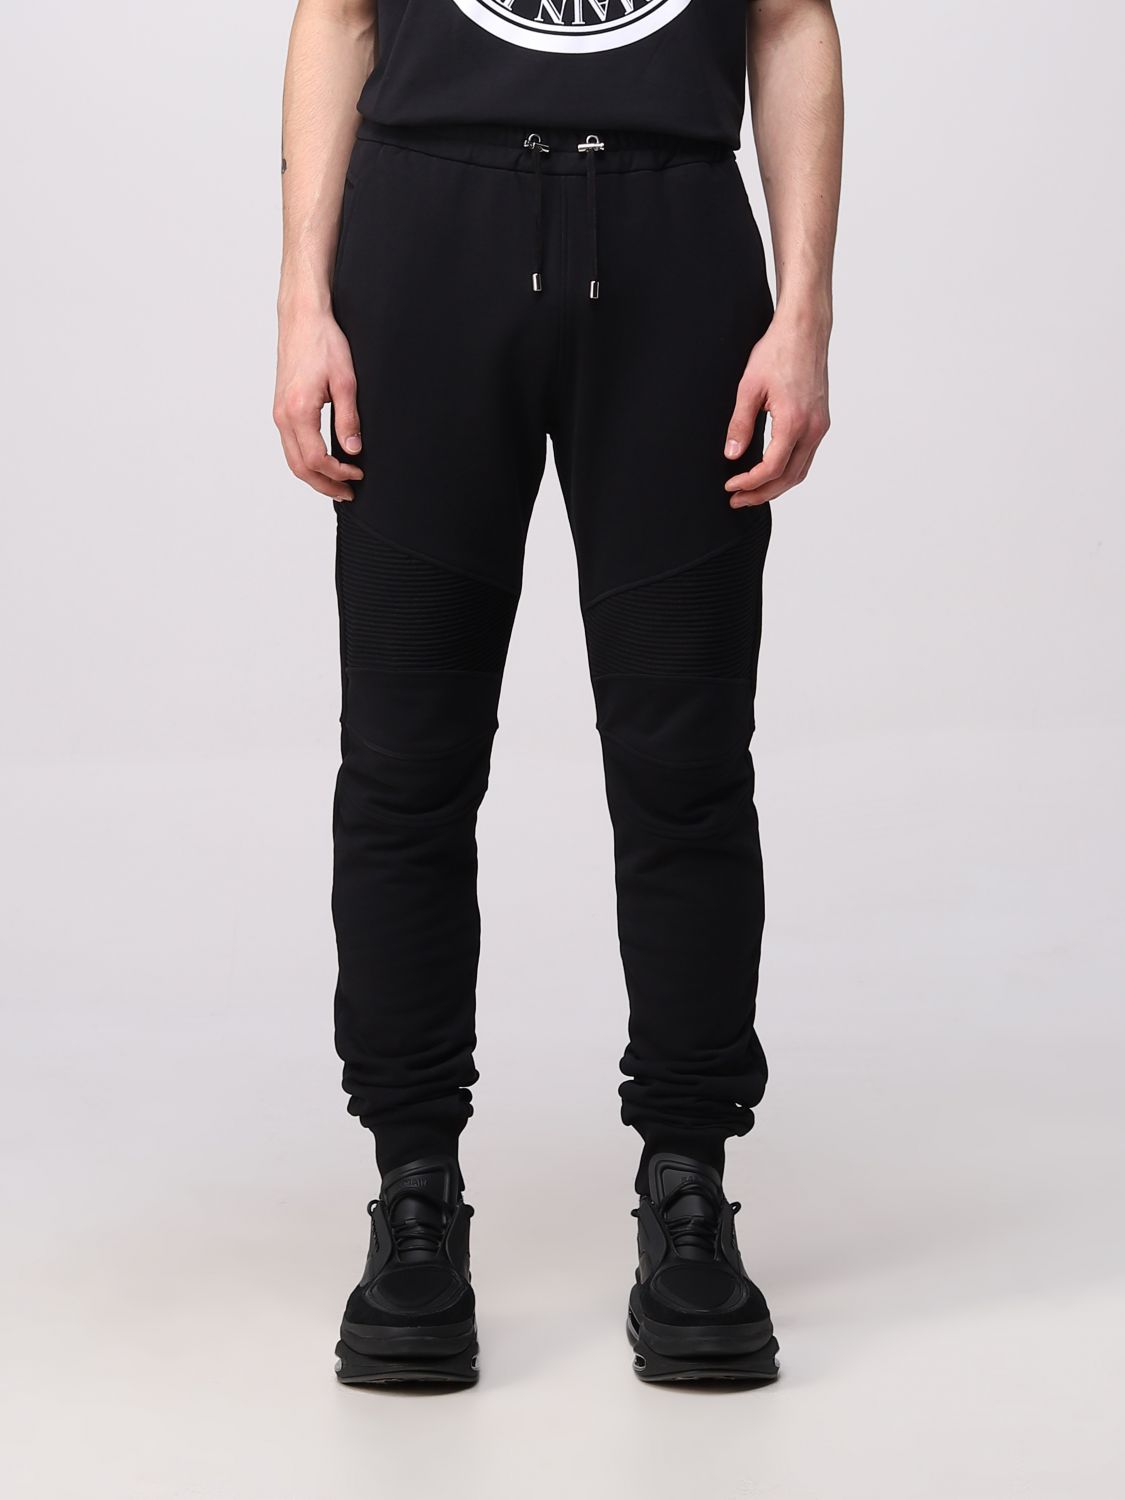 BALMAIN: pants for man - Black | Balmain pants YH1OB000BB04 online on ...